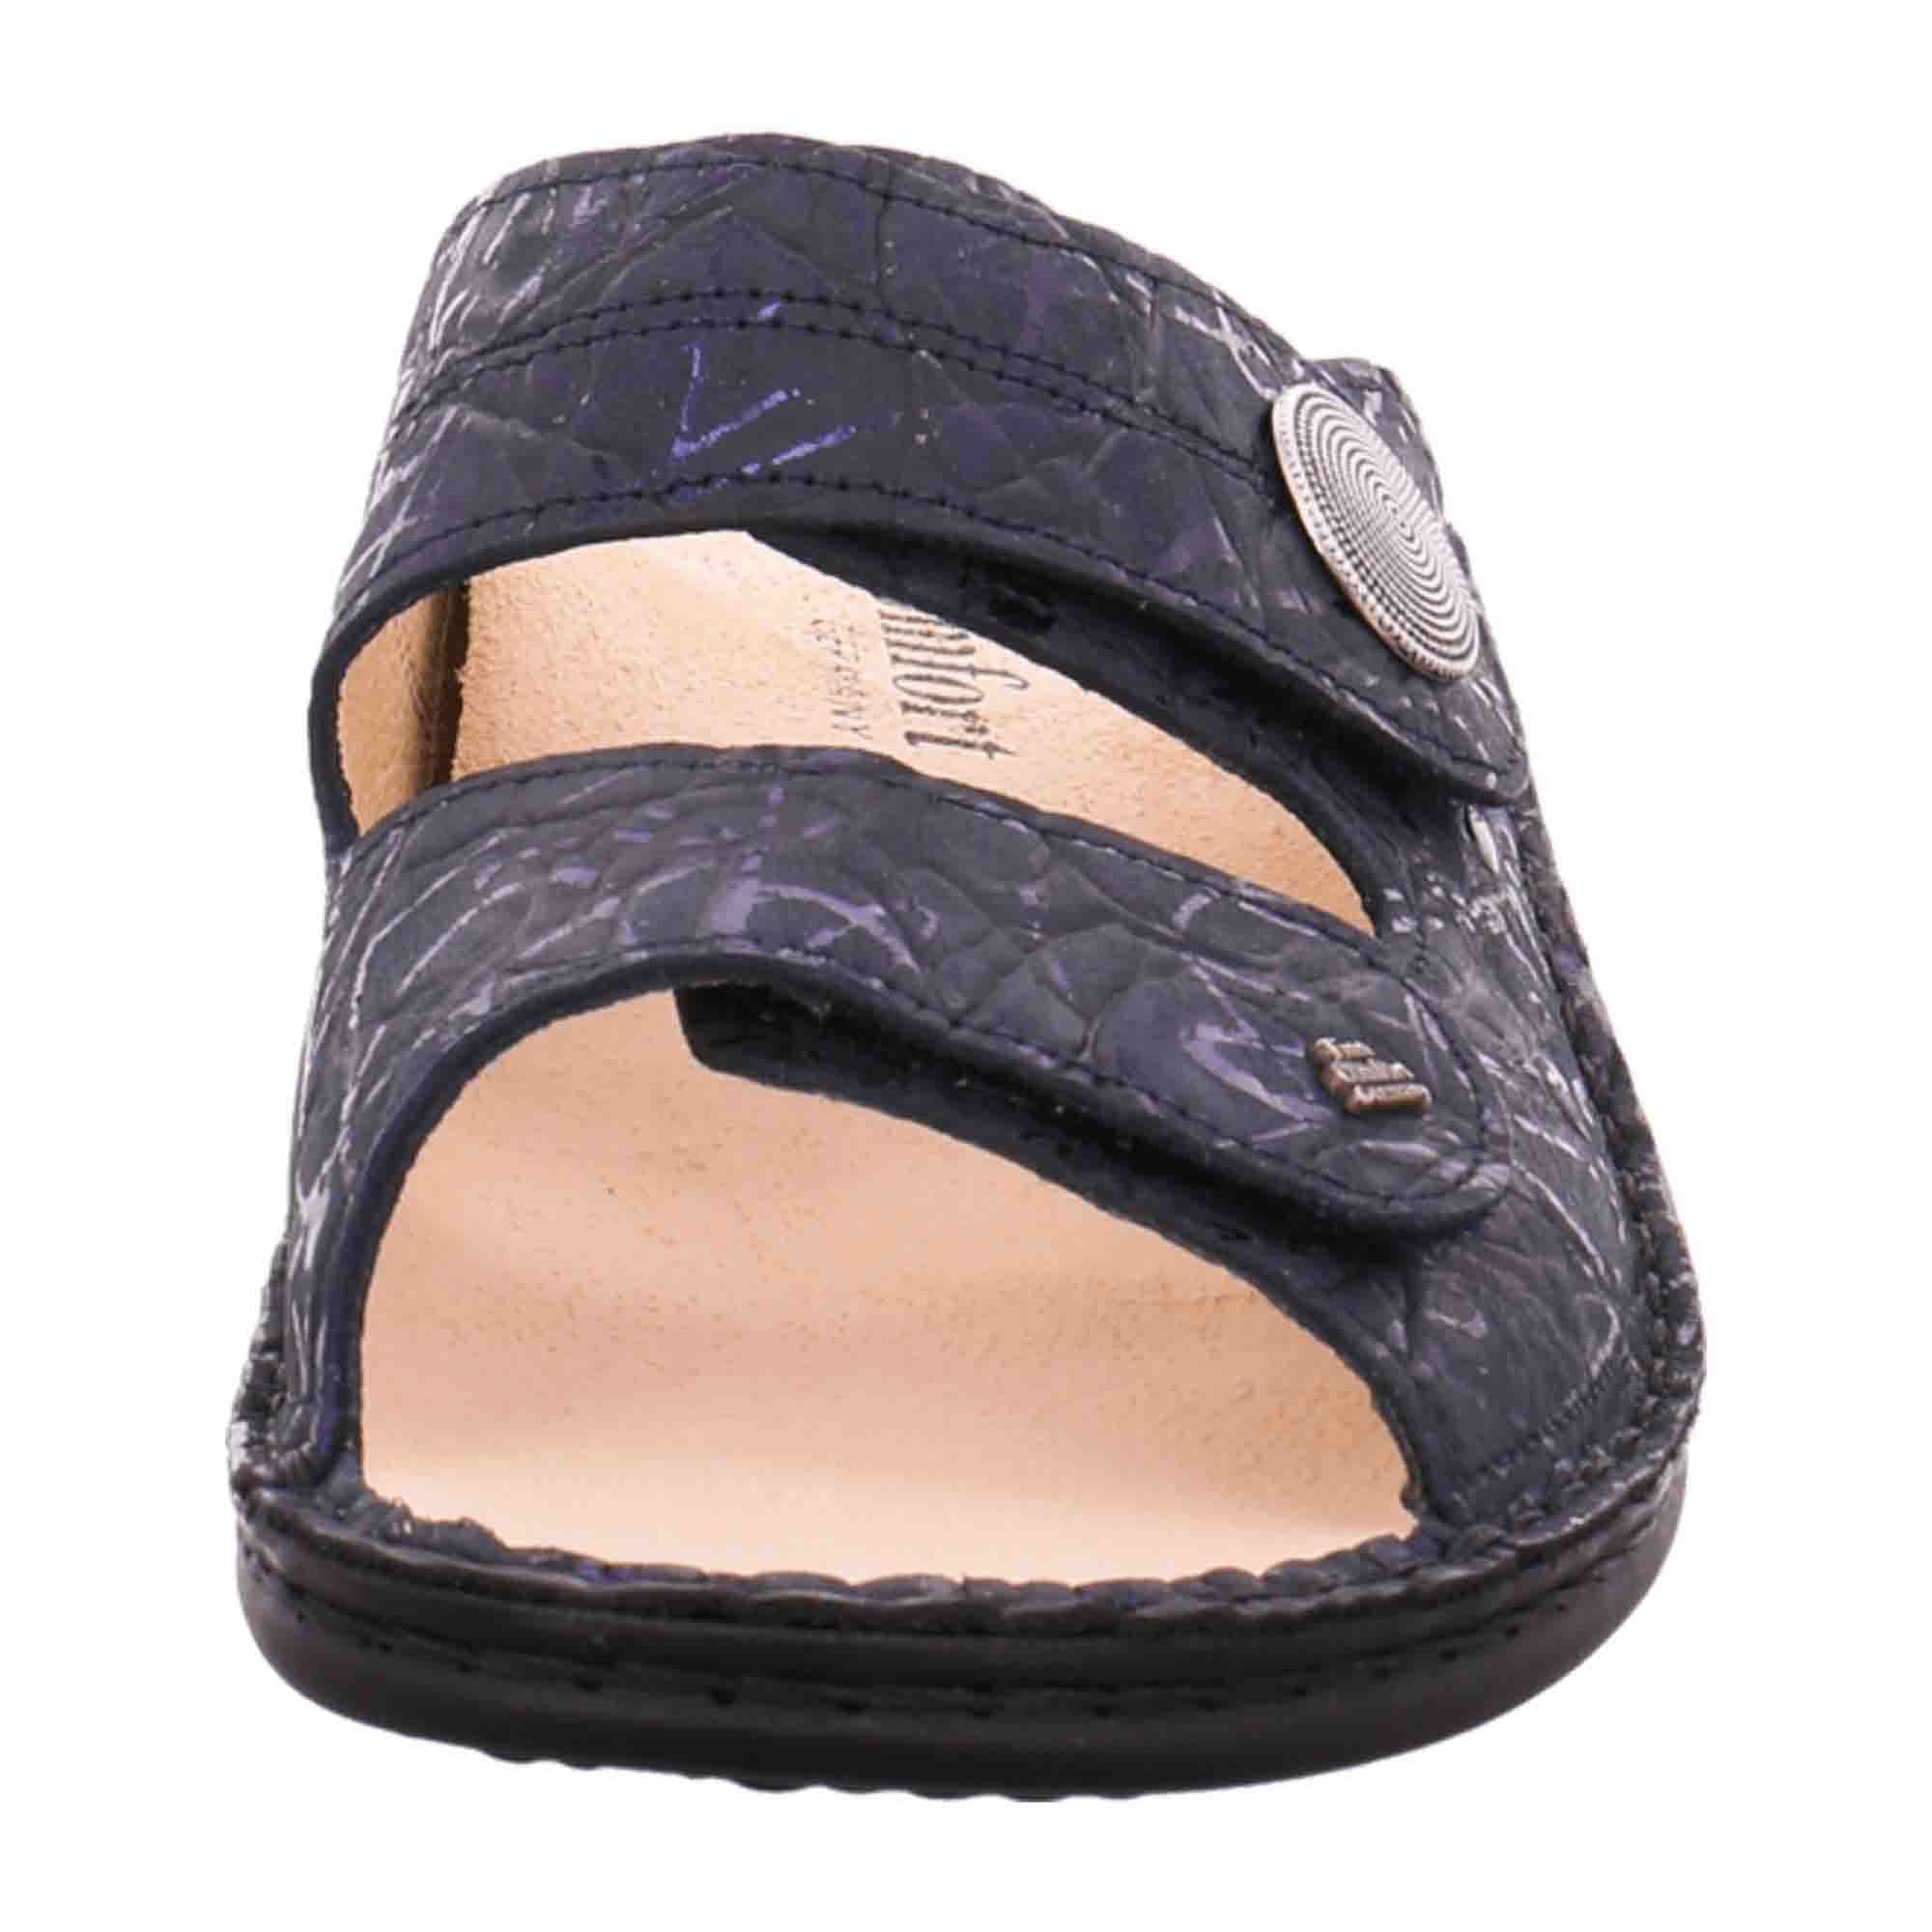 Finn Comfort Sansibar Women's Stylish Blue Sandals – Comfort and Durability